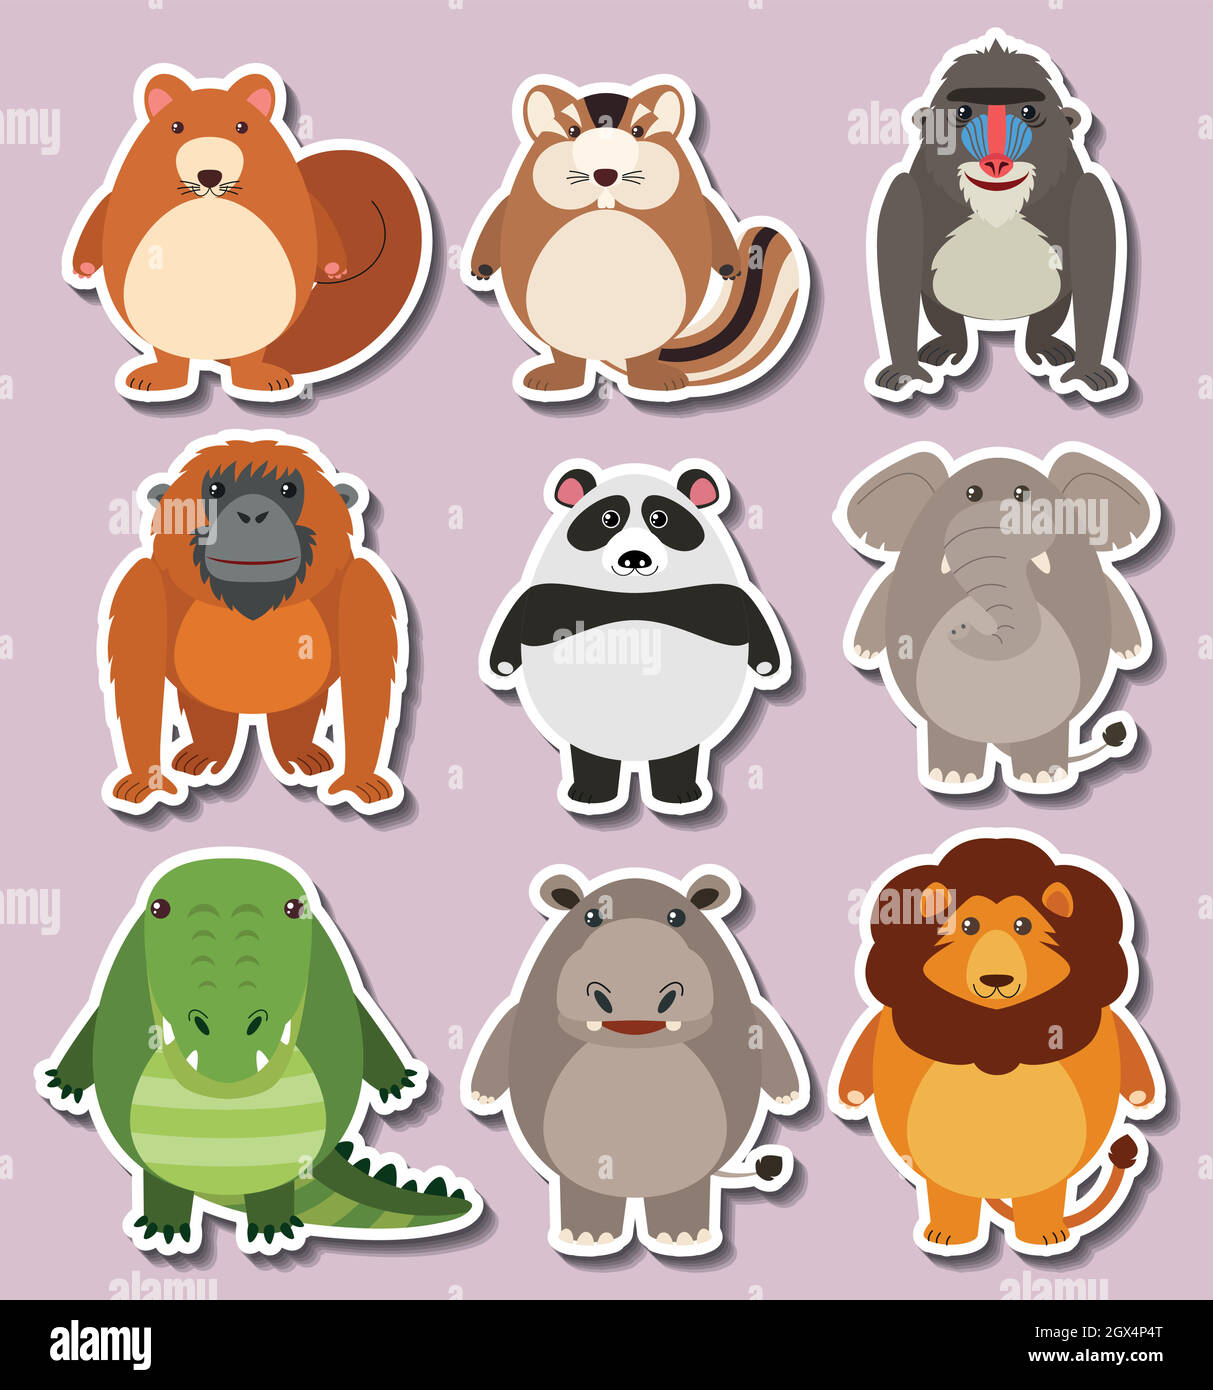 Sticker design with cute animals Stock Vector